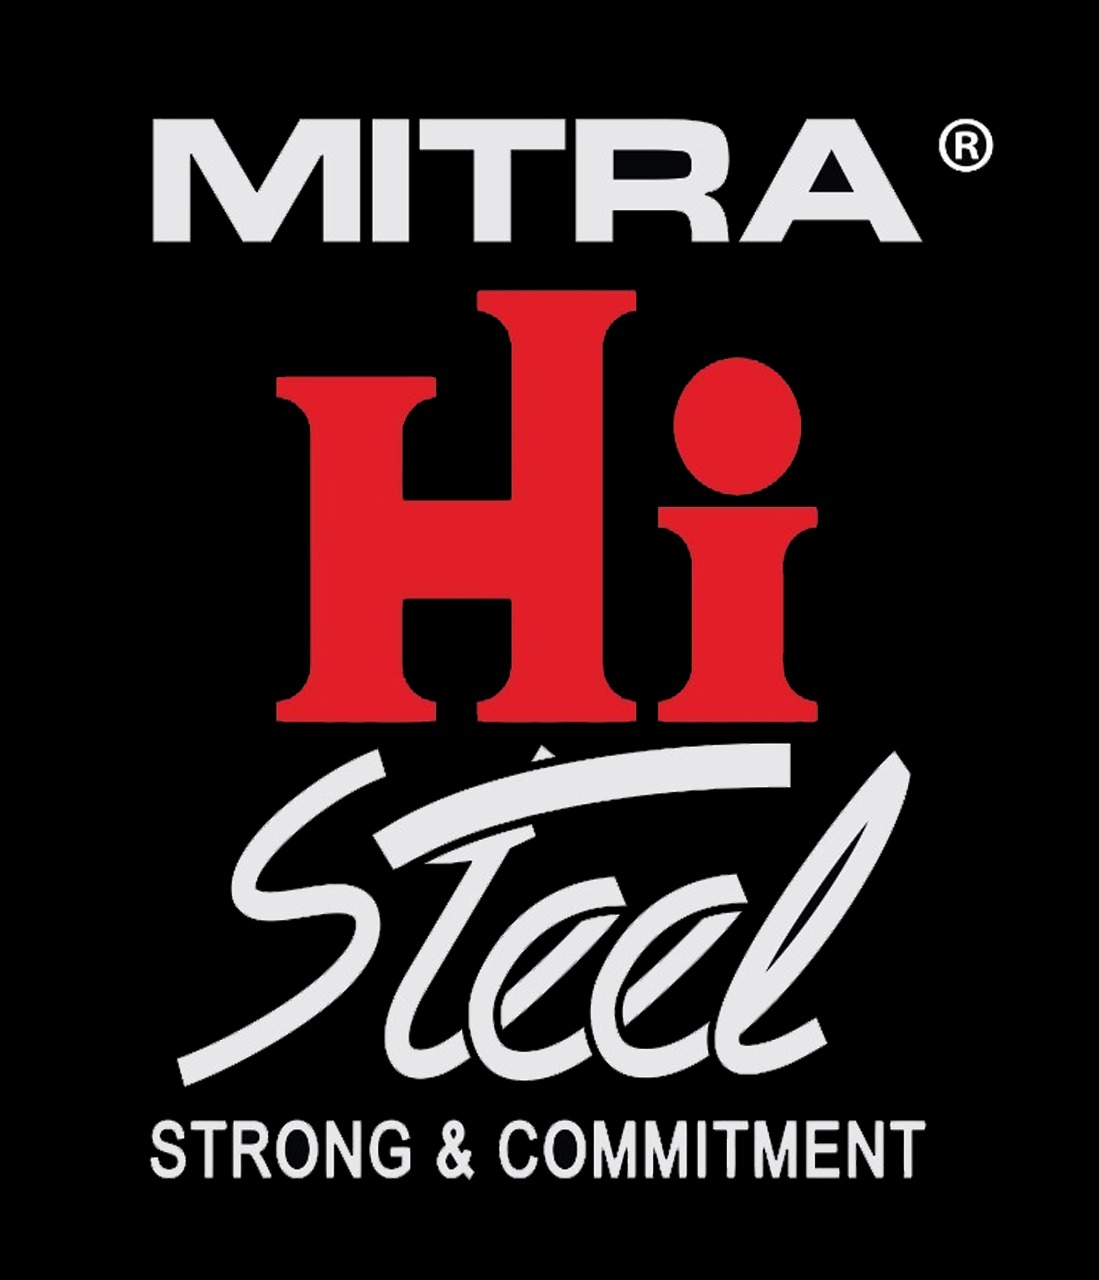 Mitra HI Steel